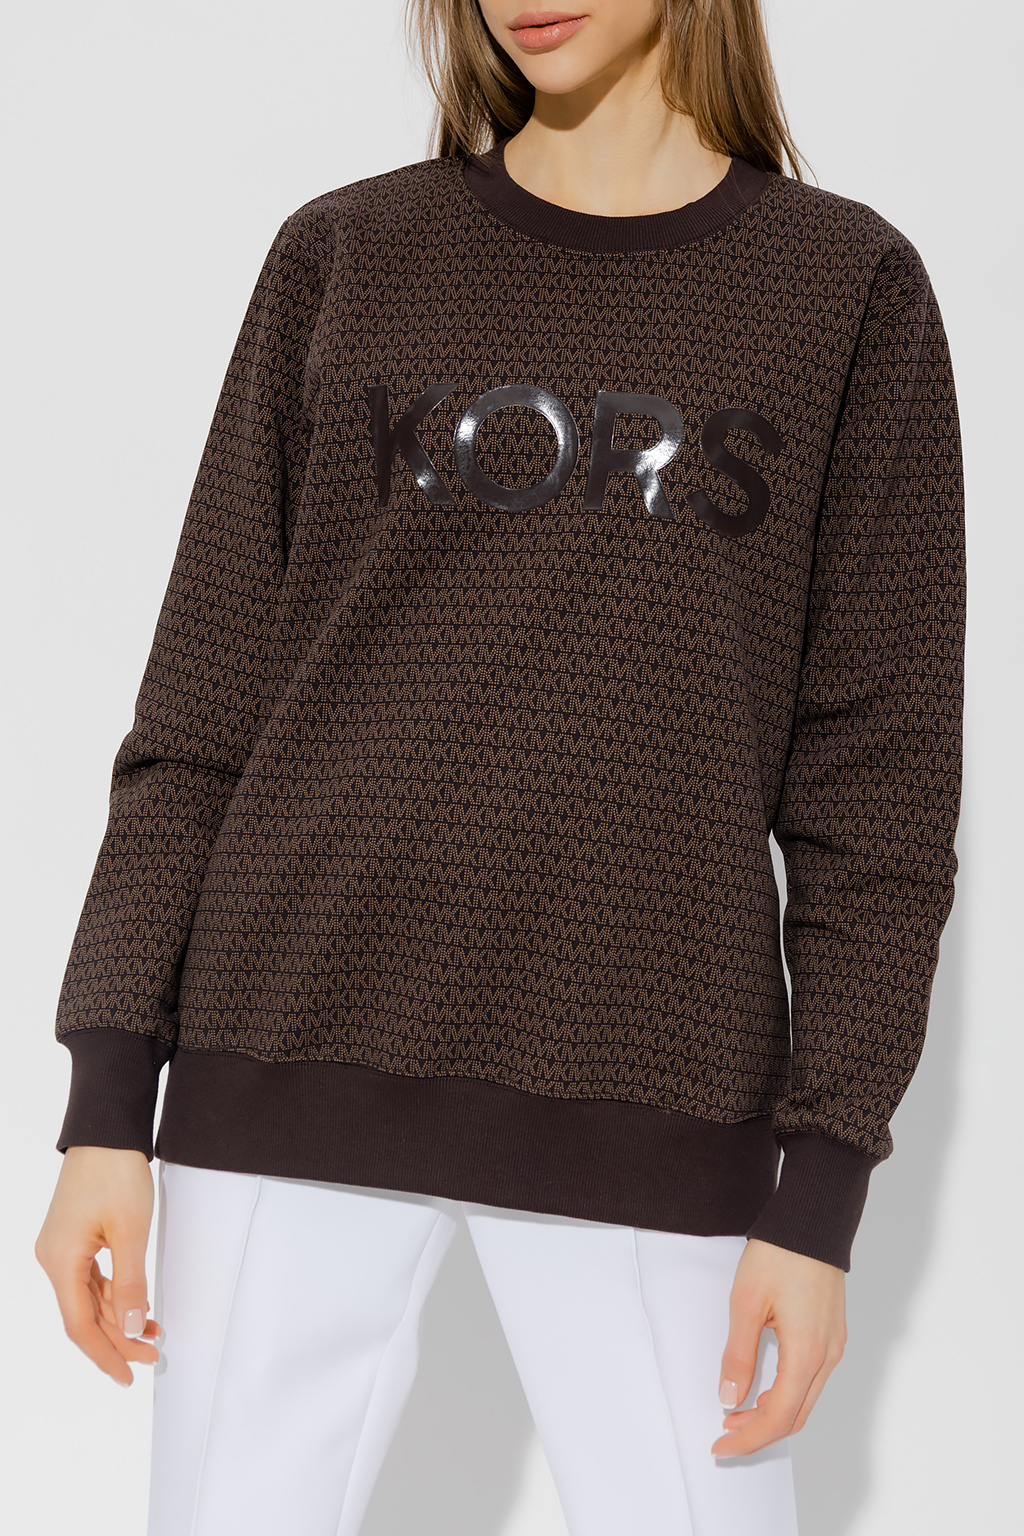 Michael Michael Kors Monogrammed sweatshirt